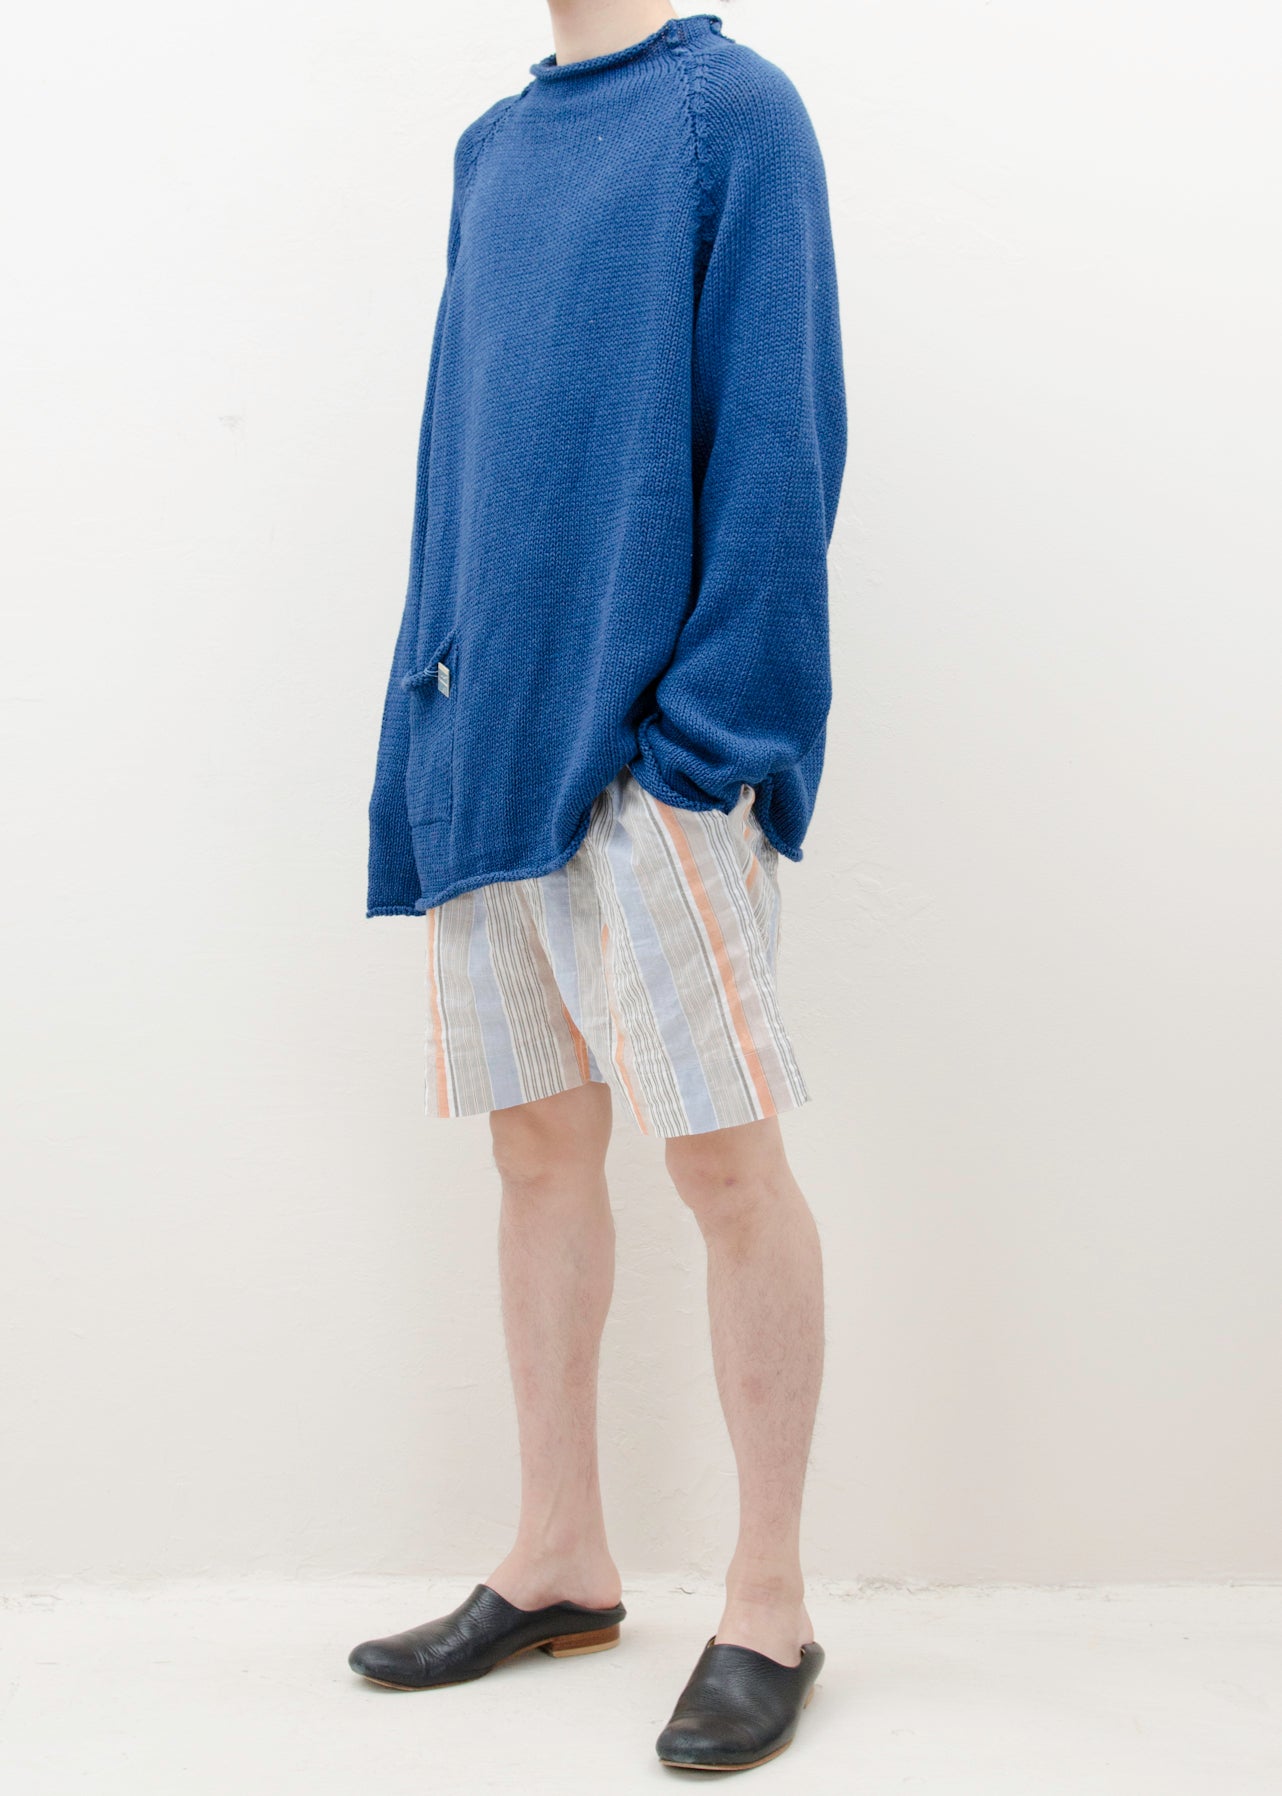 XENIA TELUNTS "Indigo Blue Fisherman Sweater"